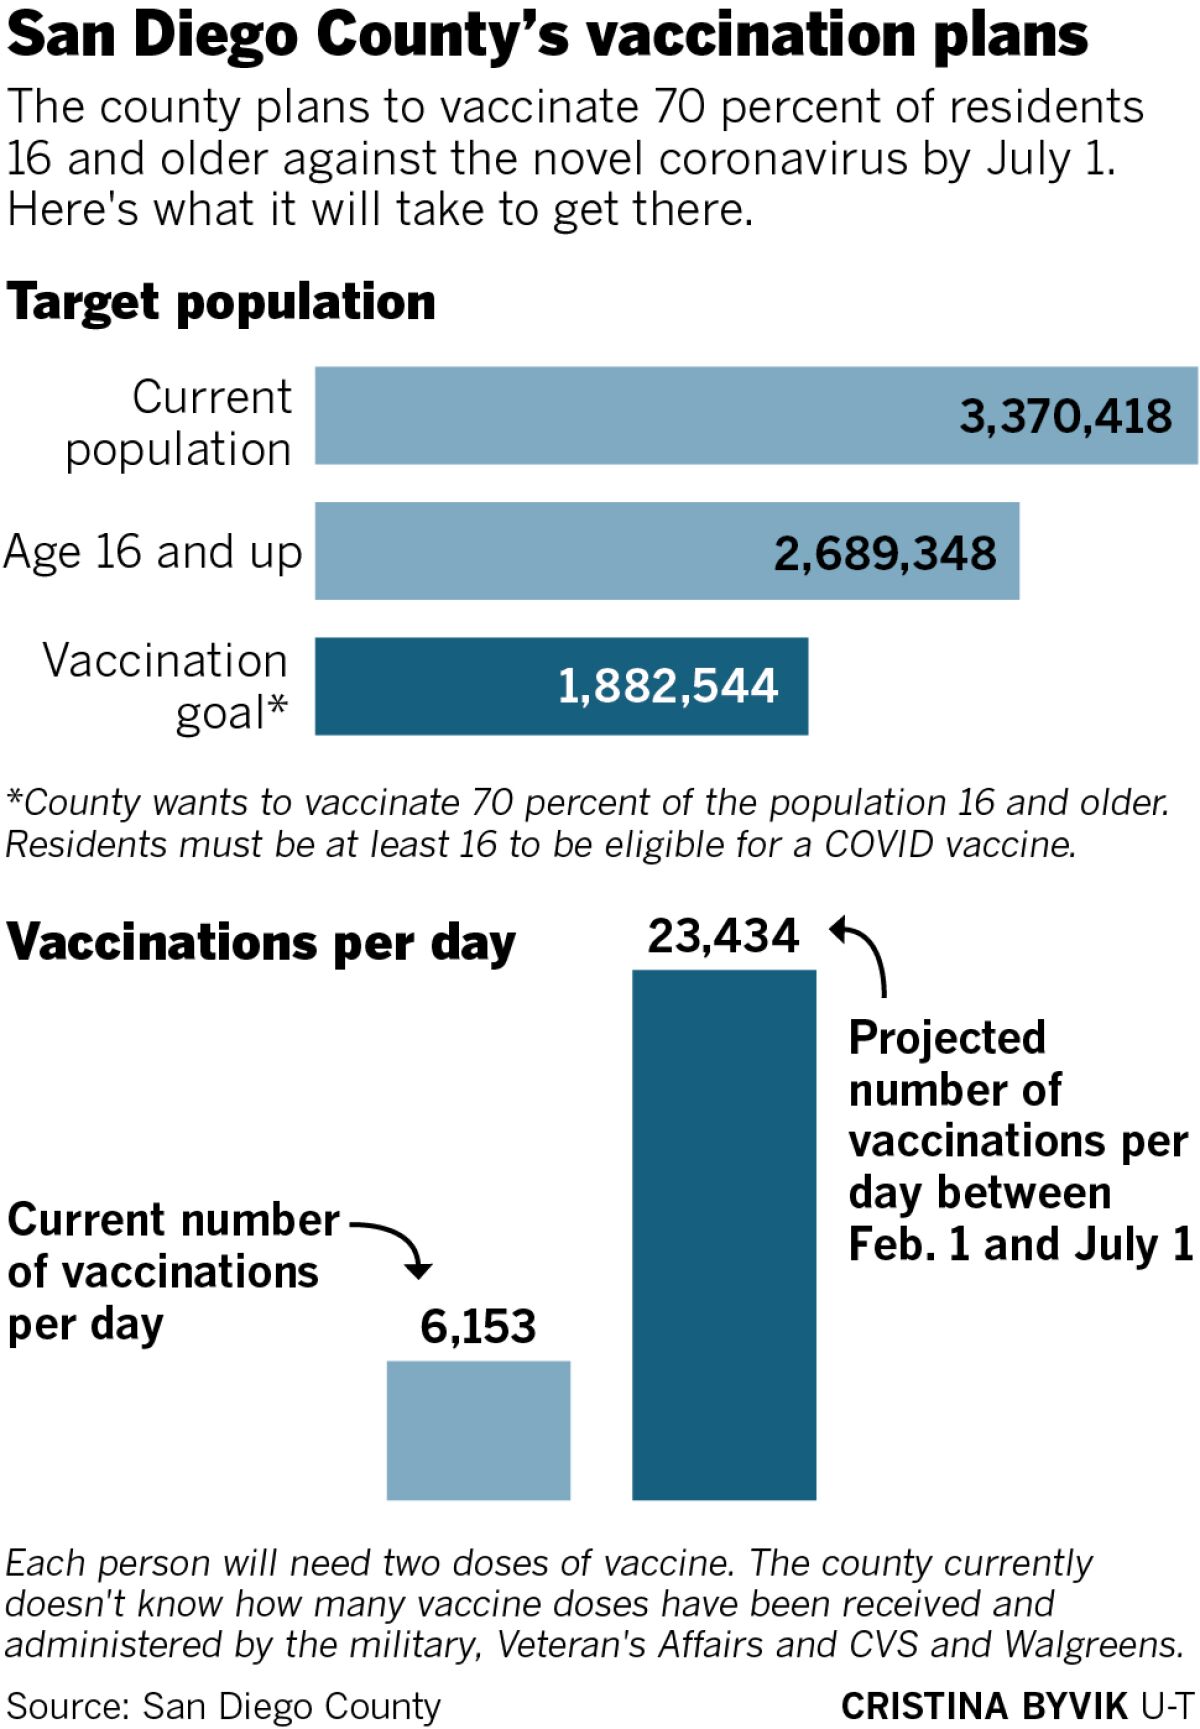 San Diego County COVID-19 vaccine plans